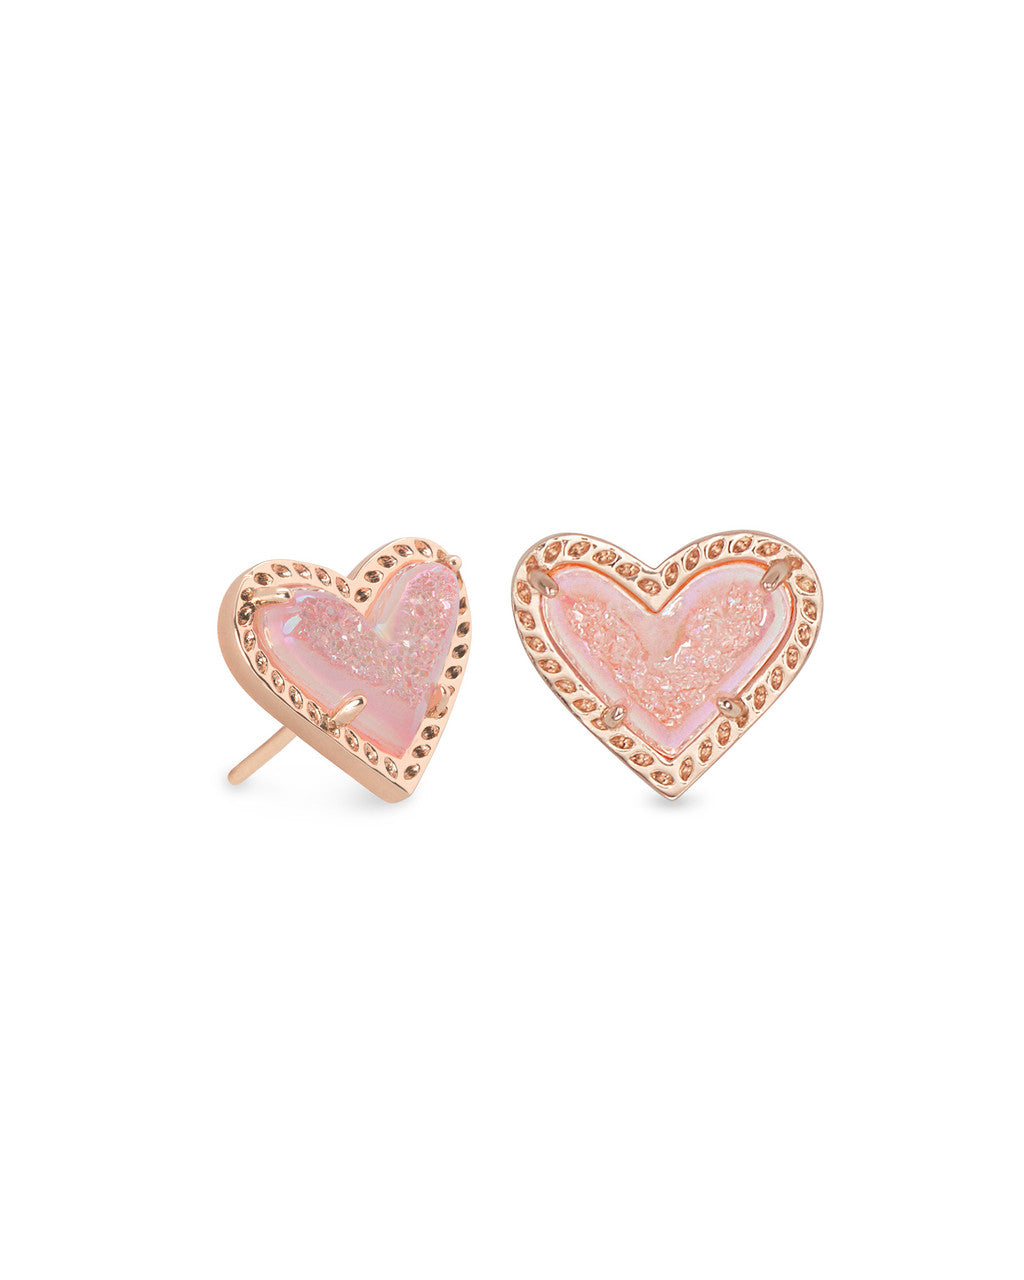 Ari Heart Rose Gold Stud Earrings In Pink Drusy